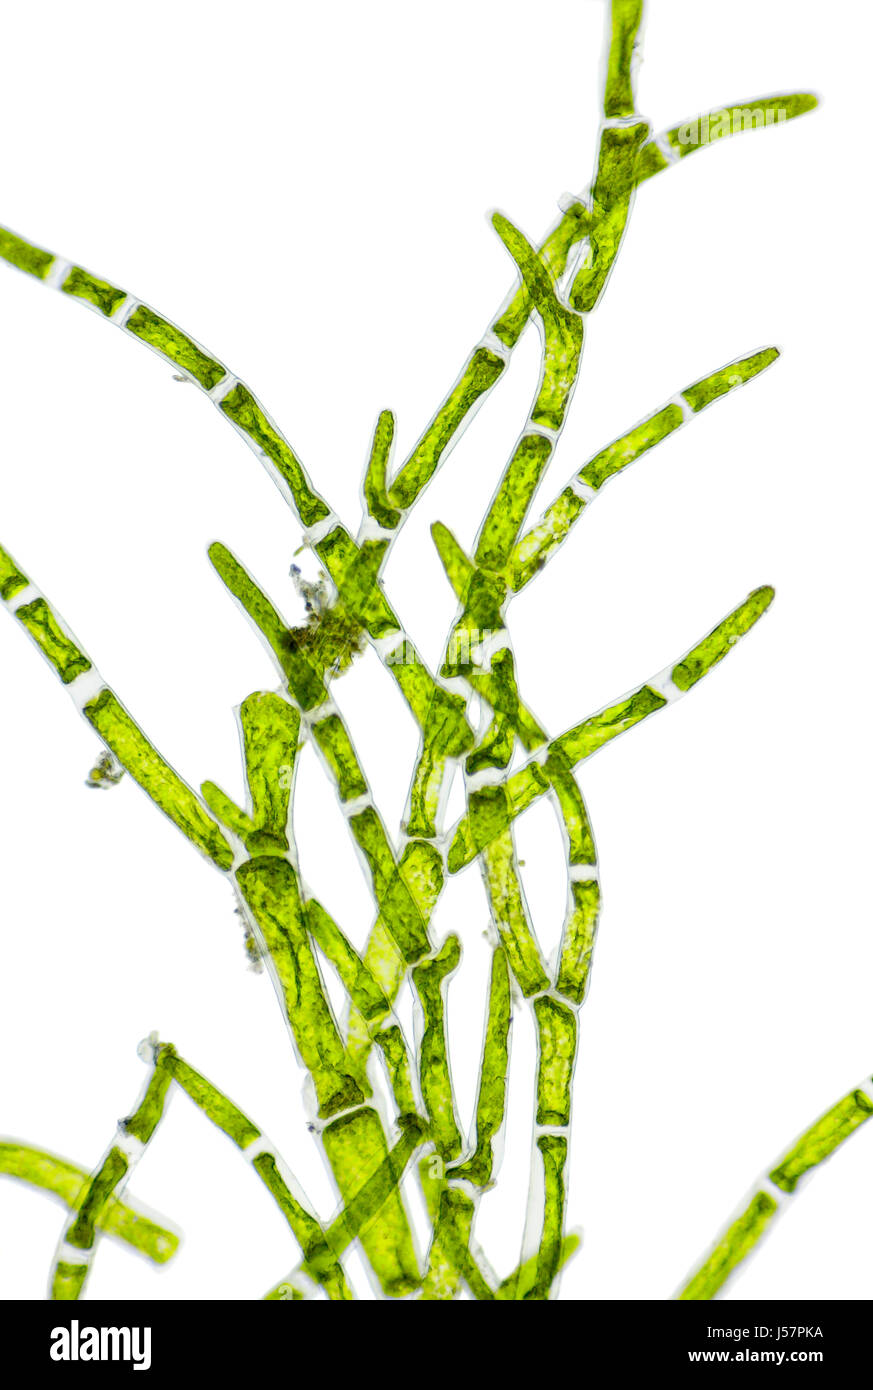 Microscopic view of green algae (Cladophora) branch. Brightfield illumination. Stock Photo